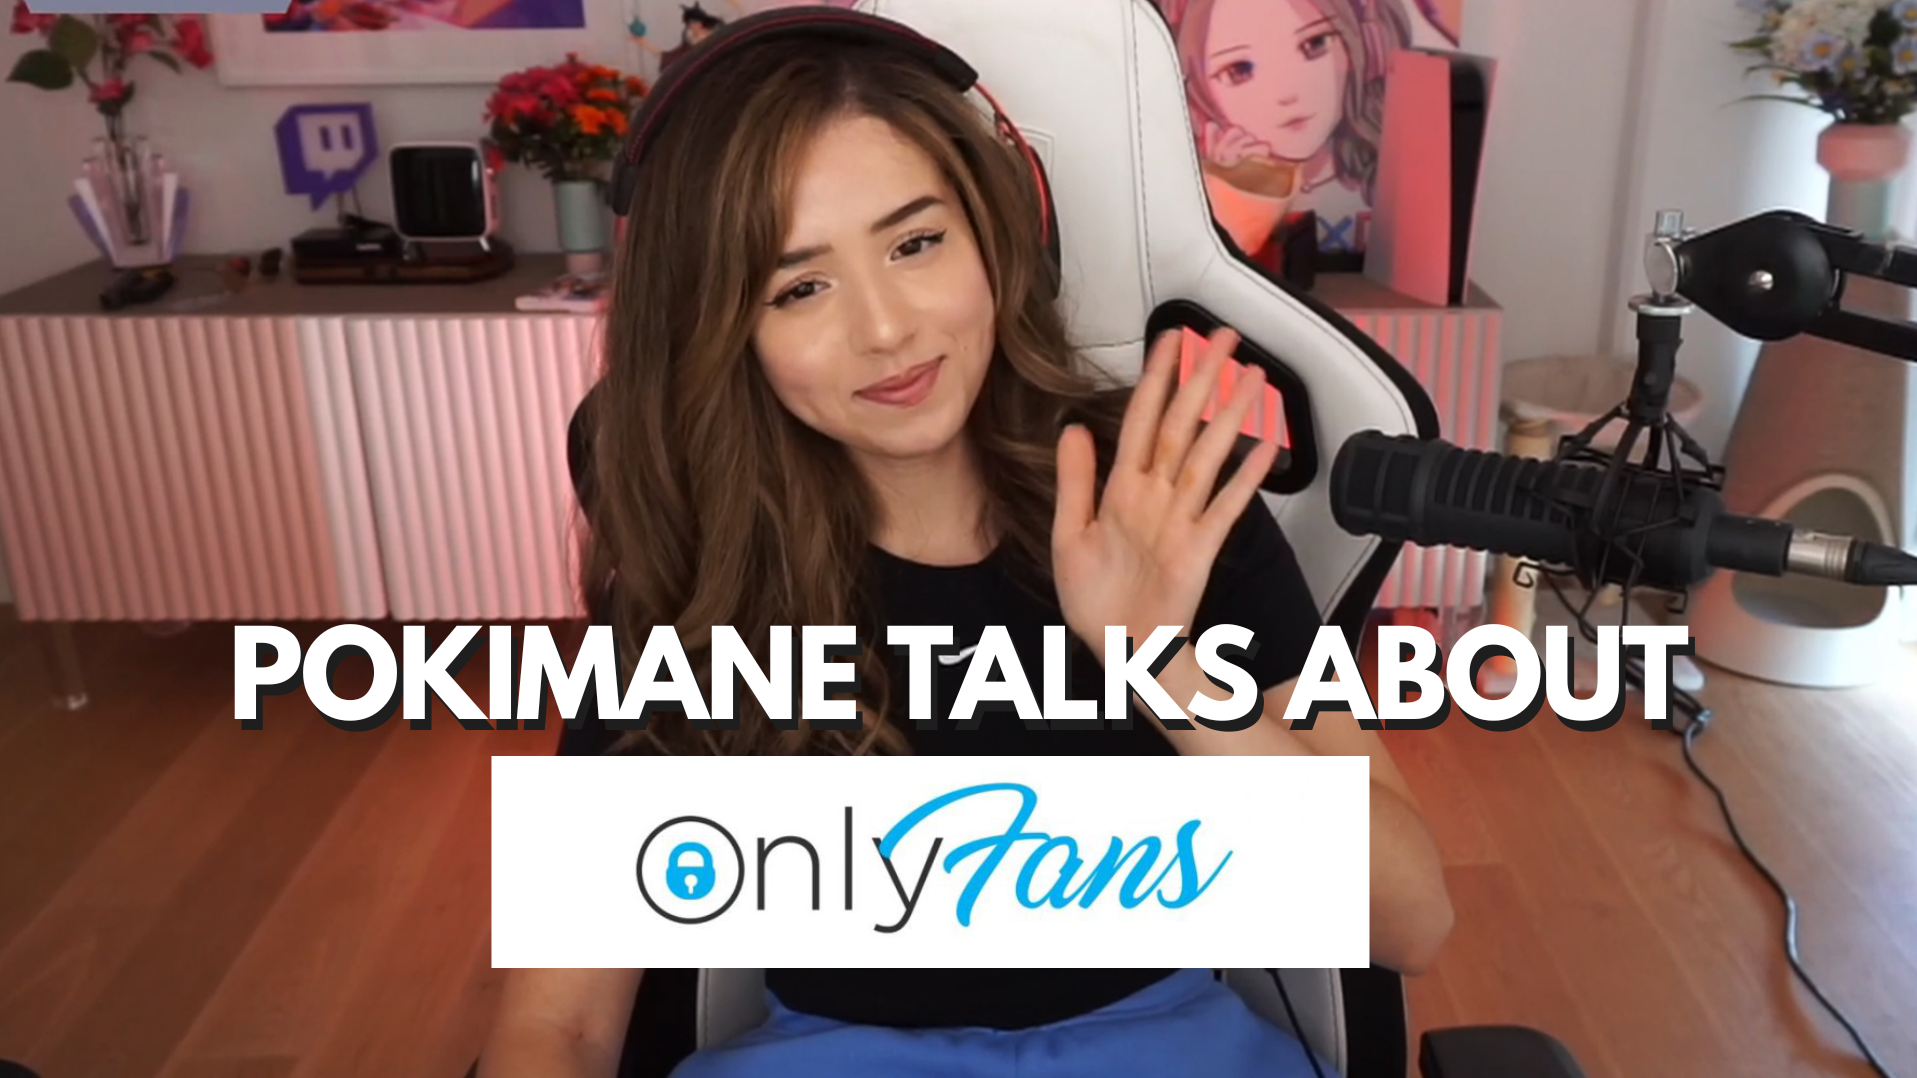 Imane Anys Aka Pokimane Talks About Onlyf Ns On Twitch